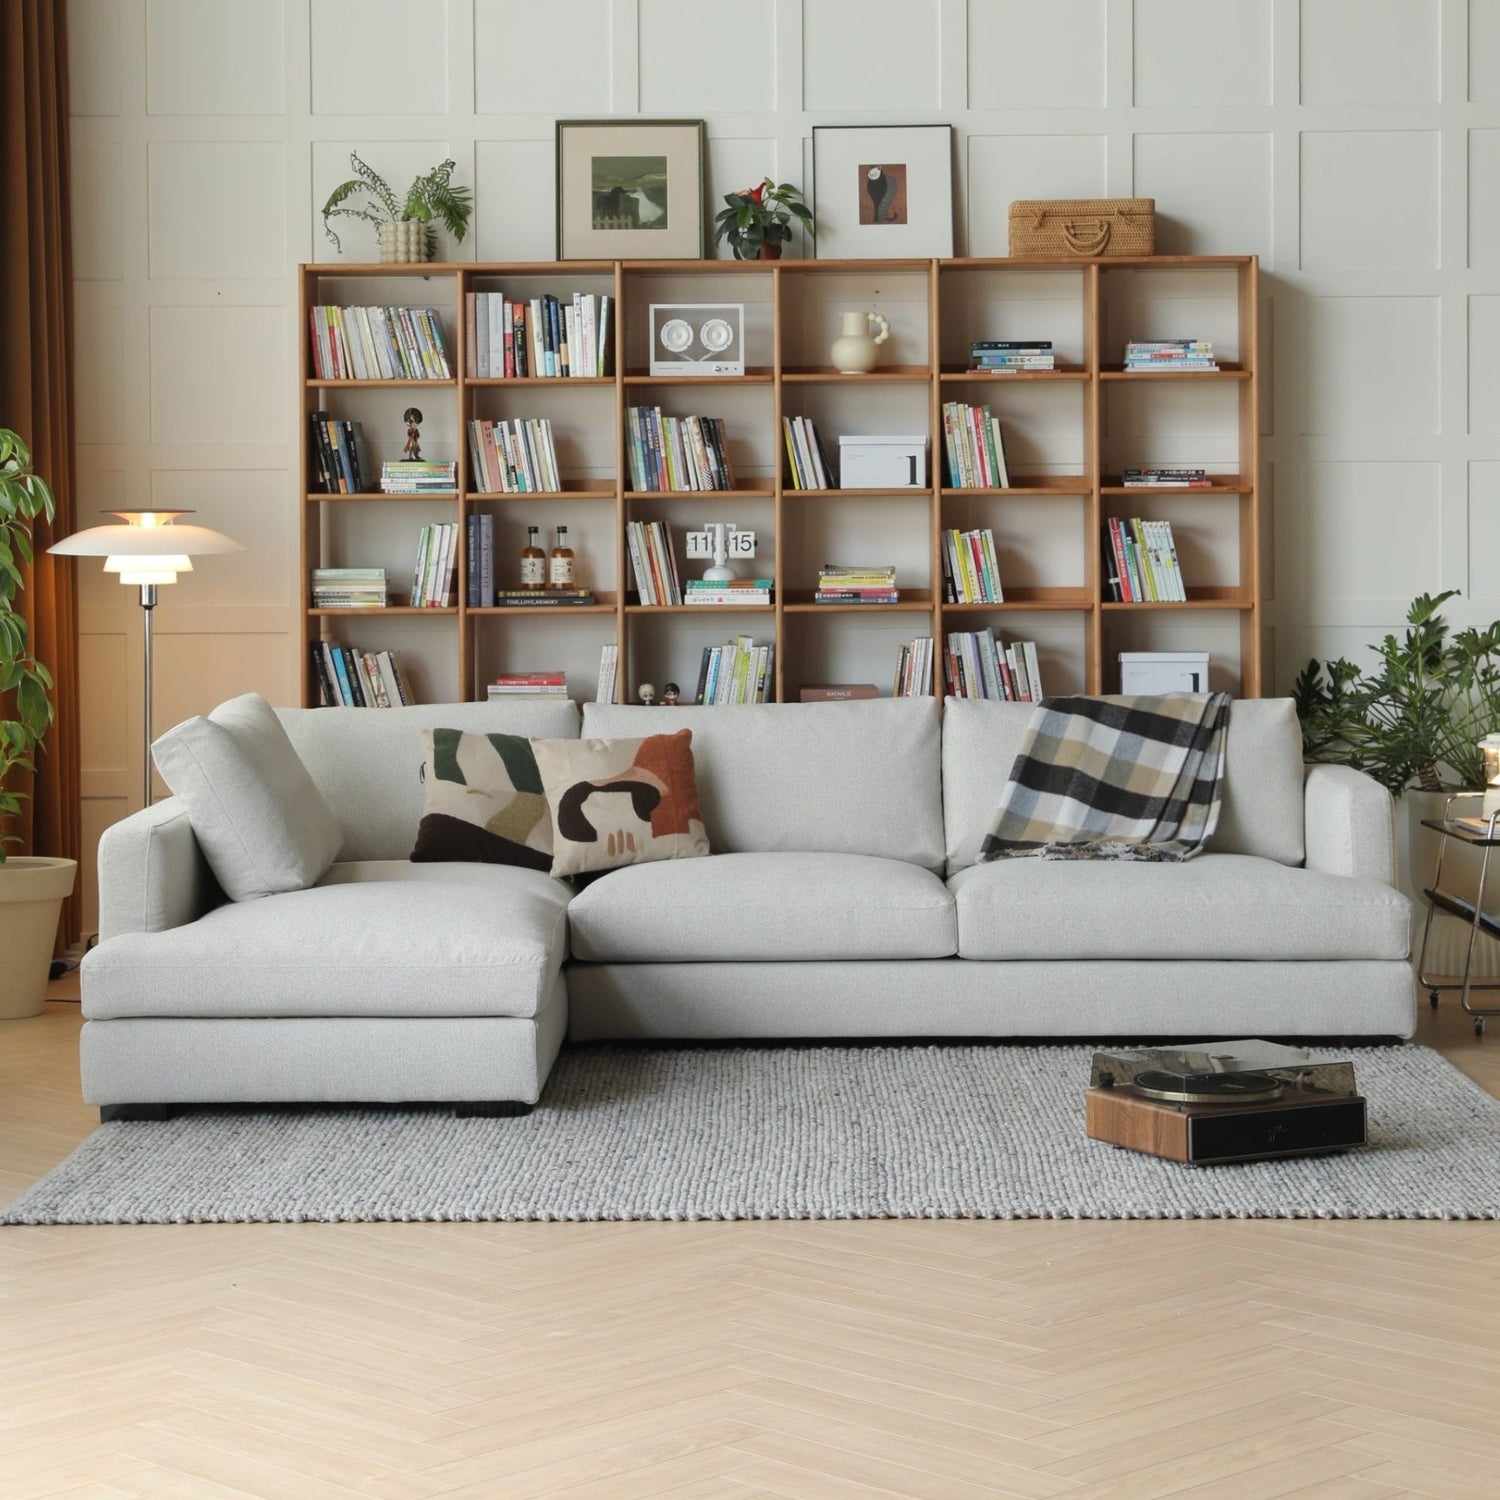 Crescent grey sectional sofa